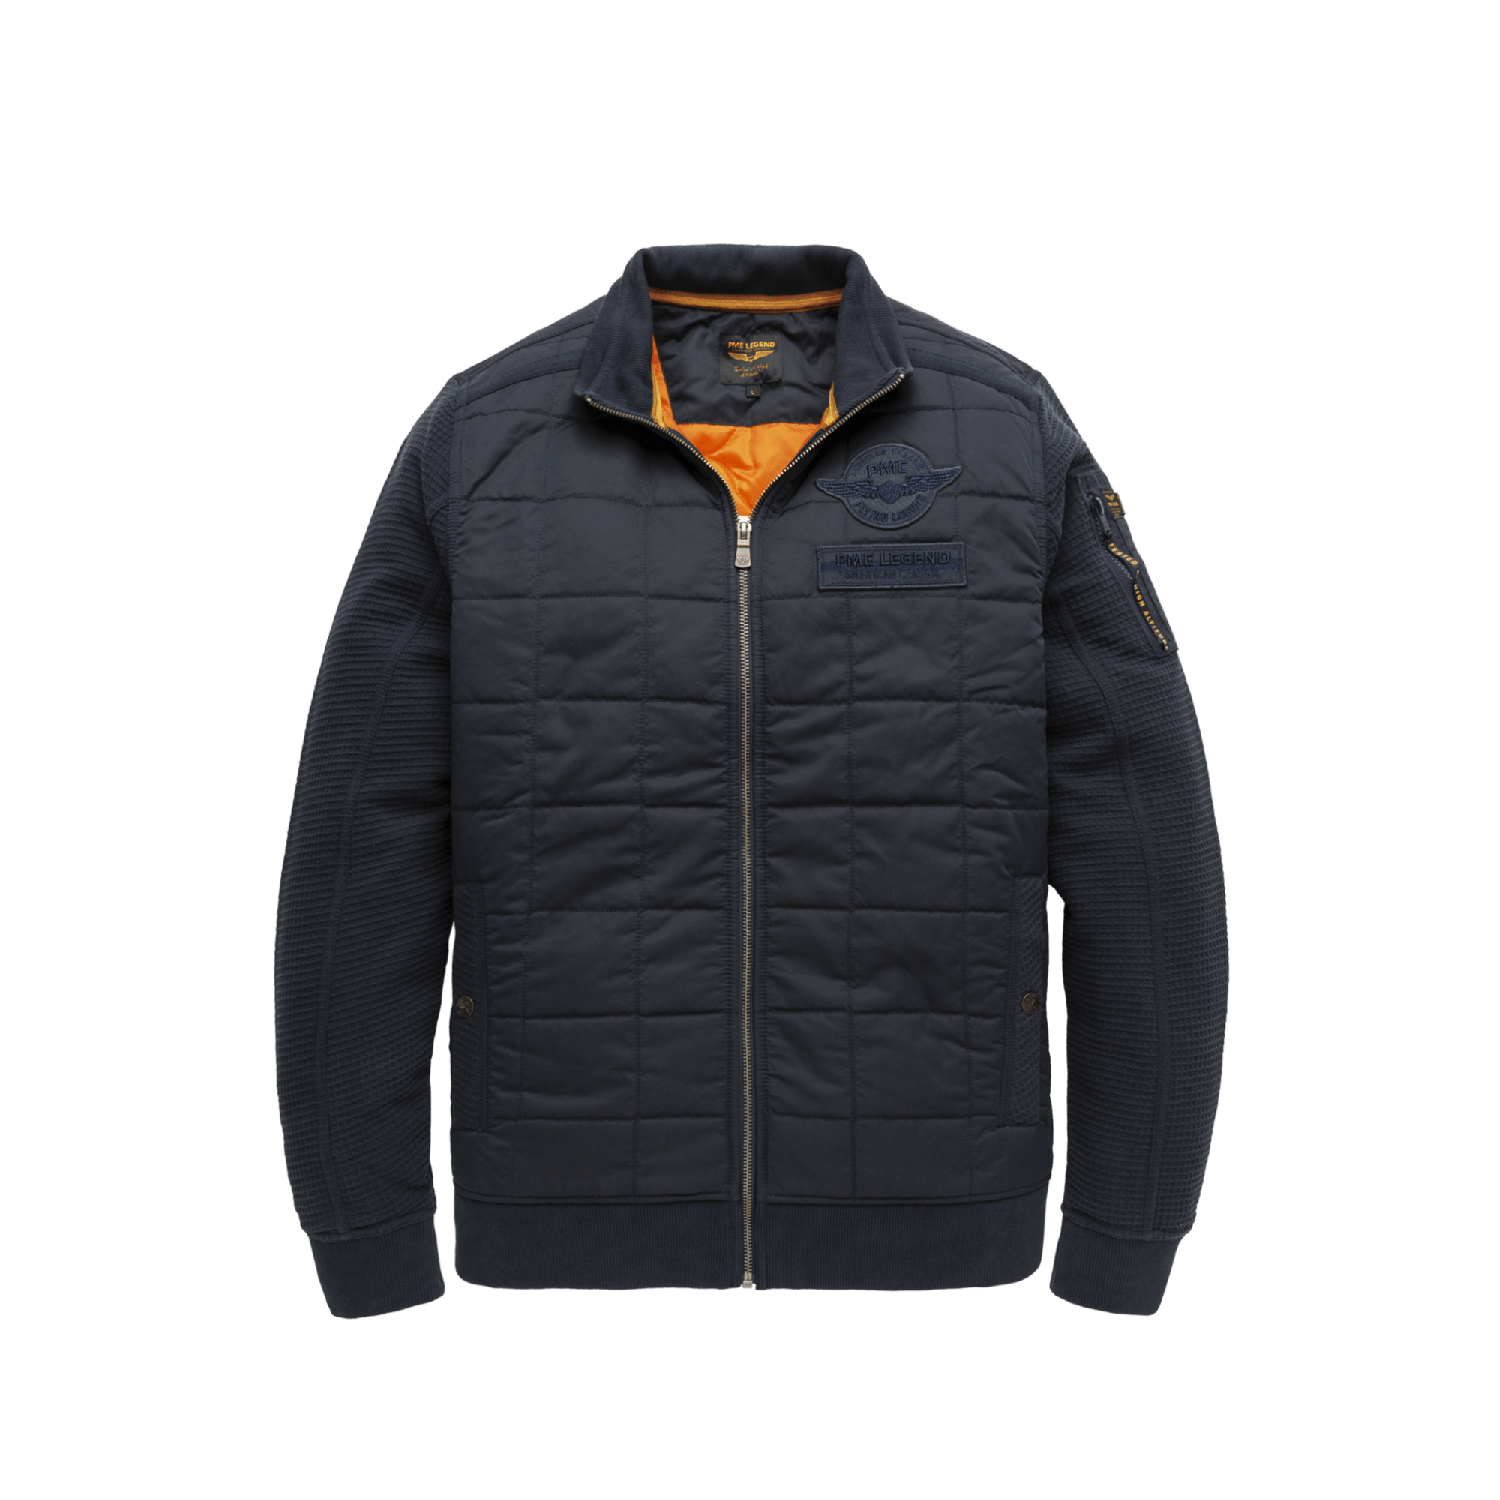 PME Legend zip jacket structure sweat salute